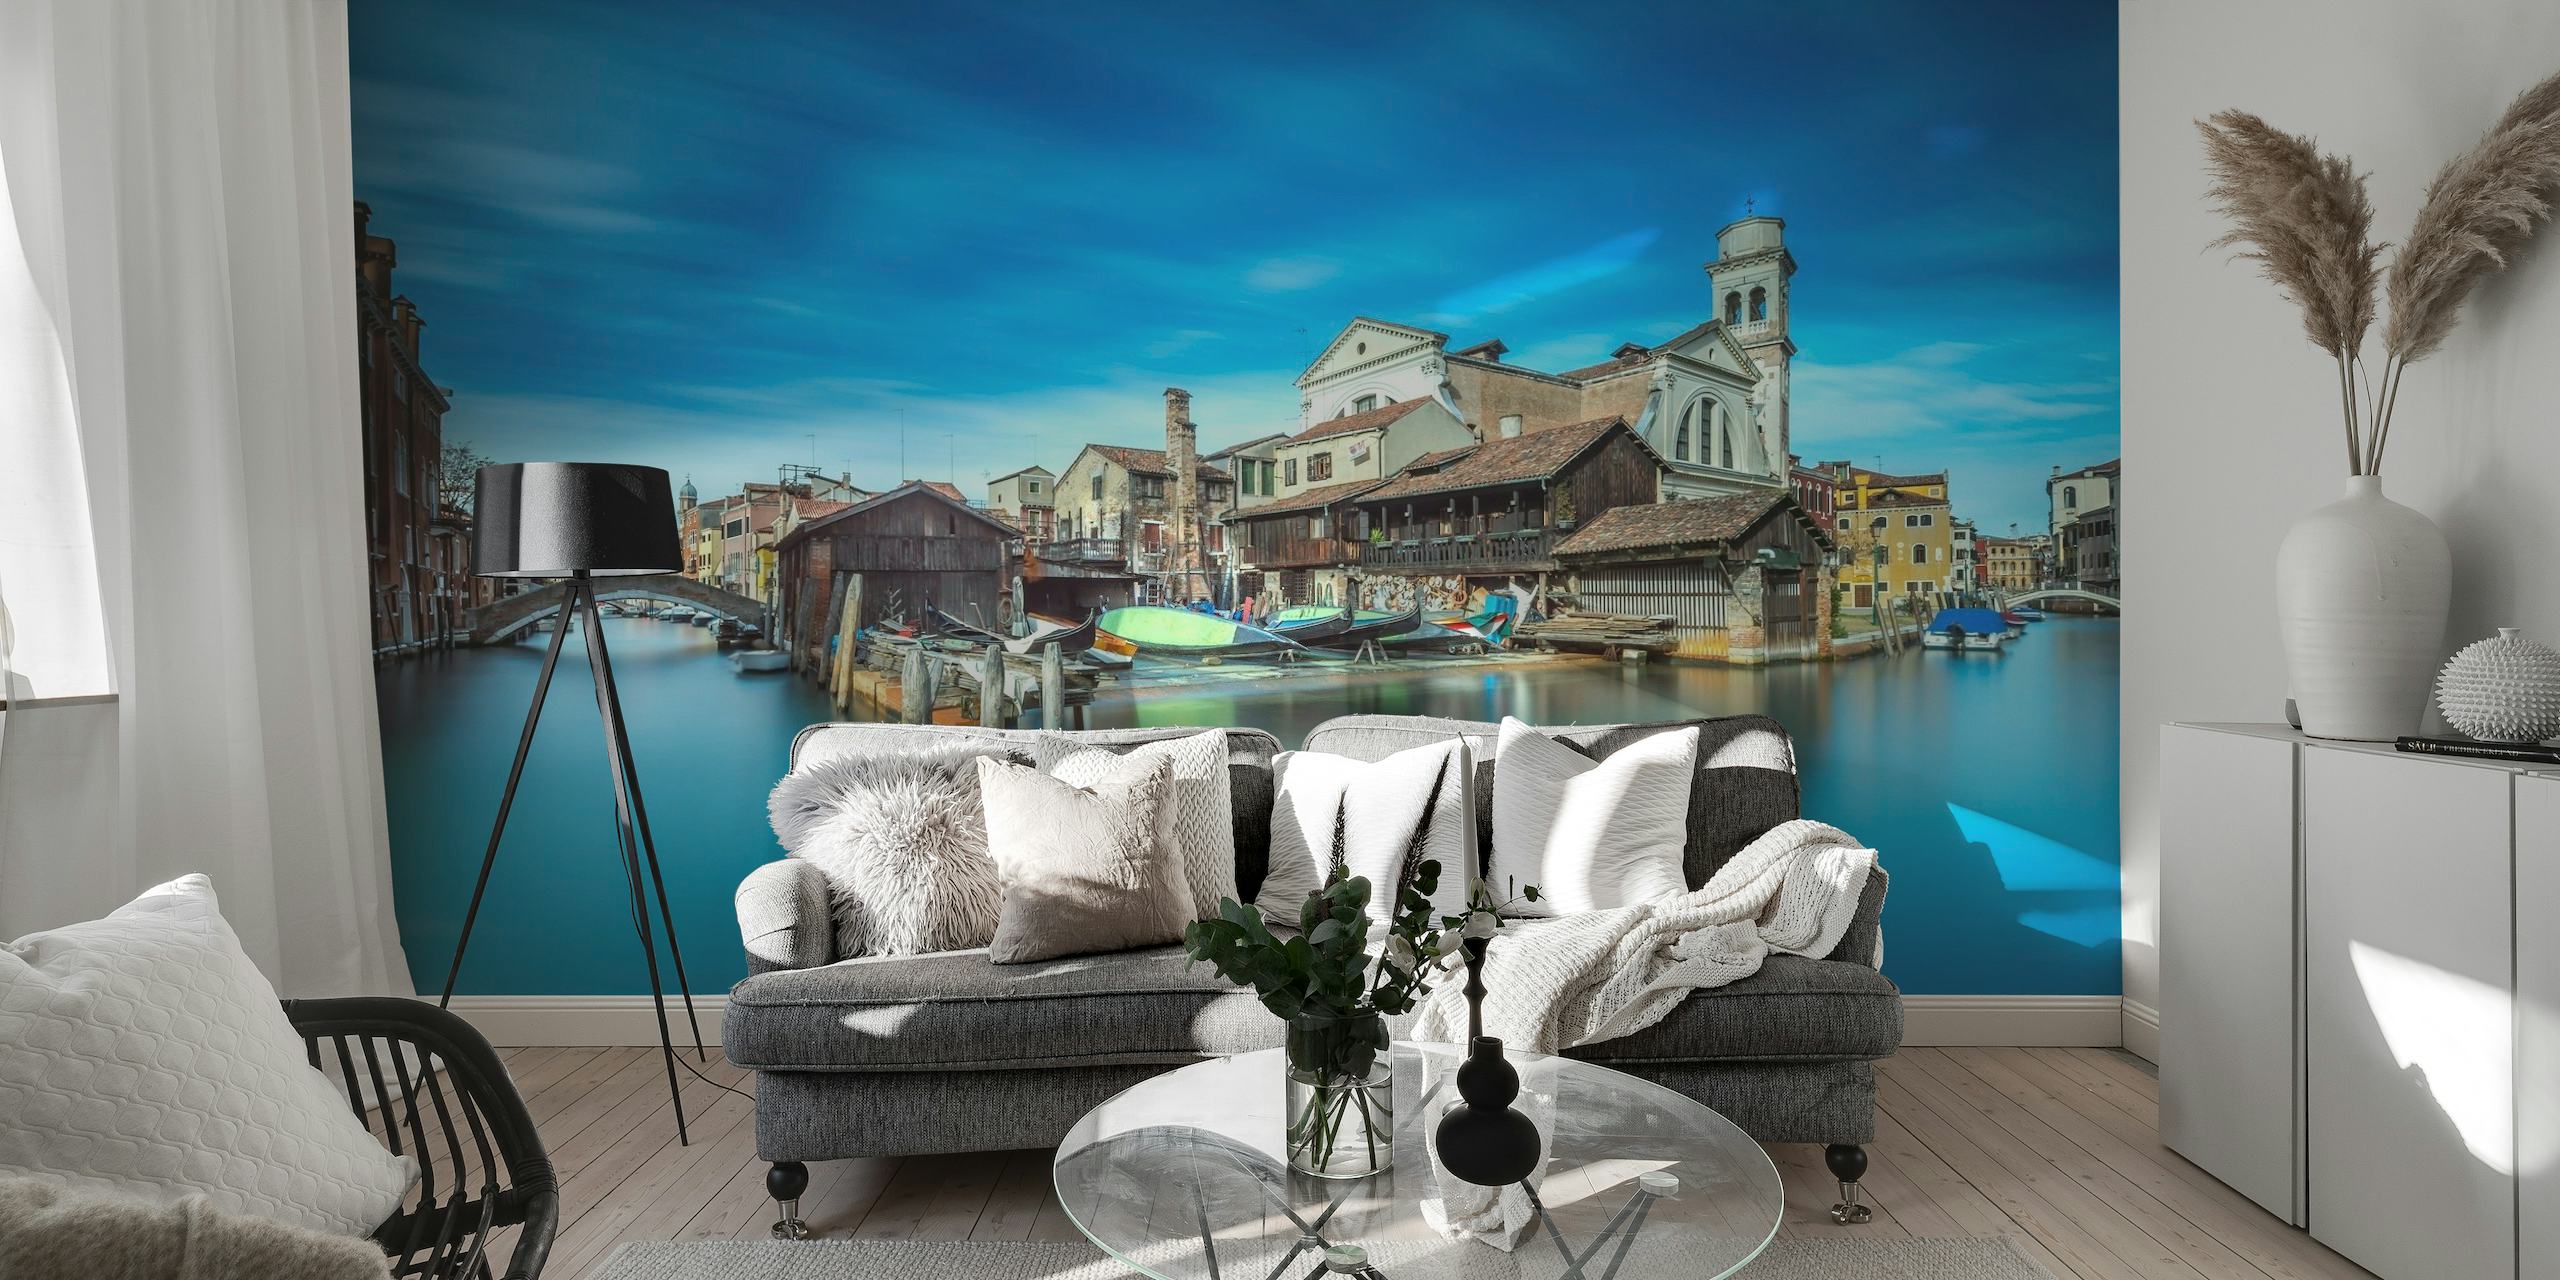 Venetian scene wall mural with gondolas and historic buildings